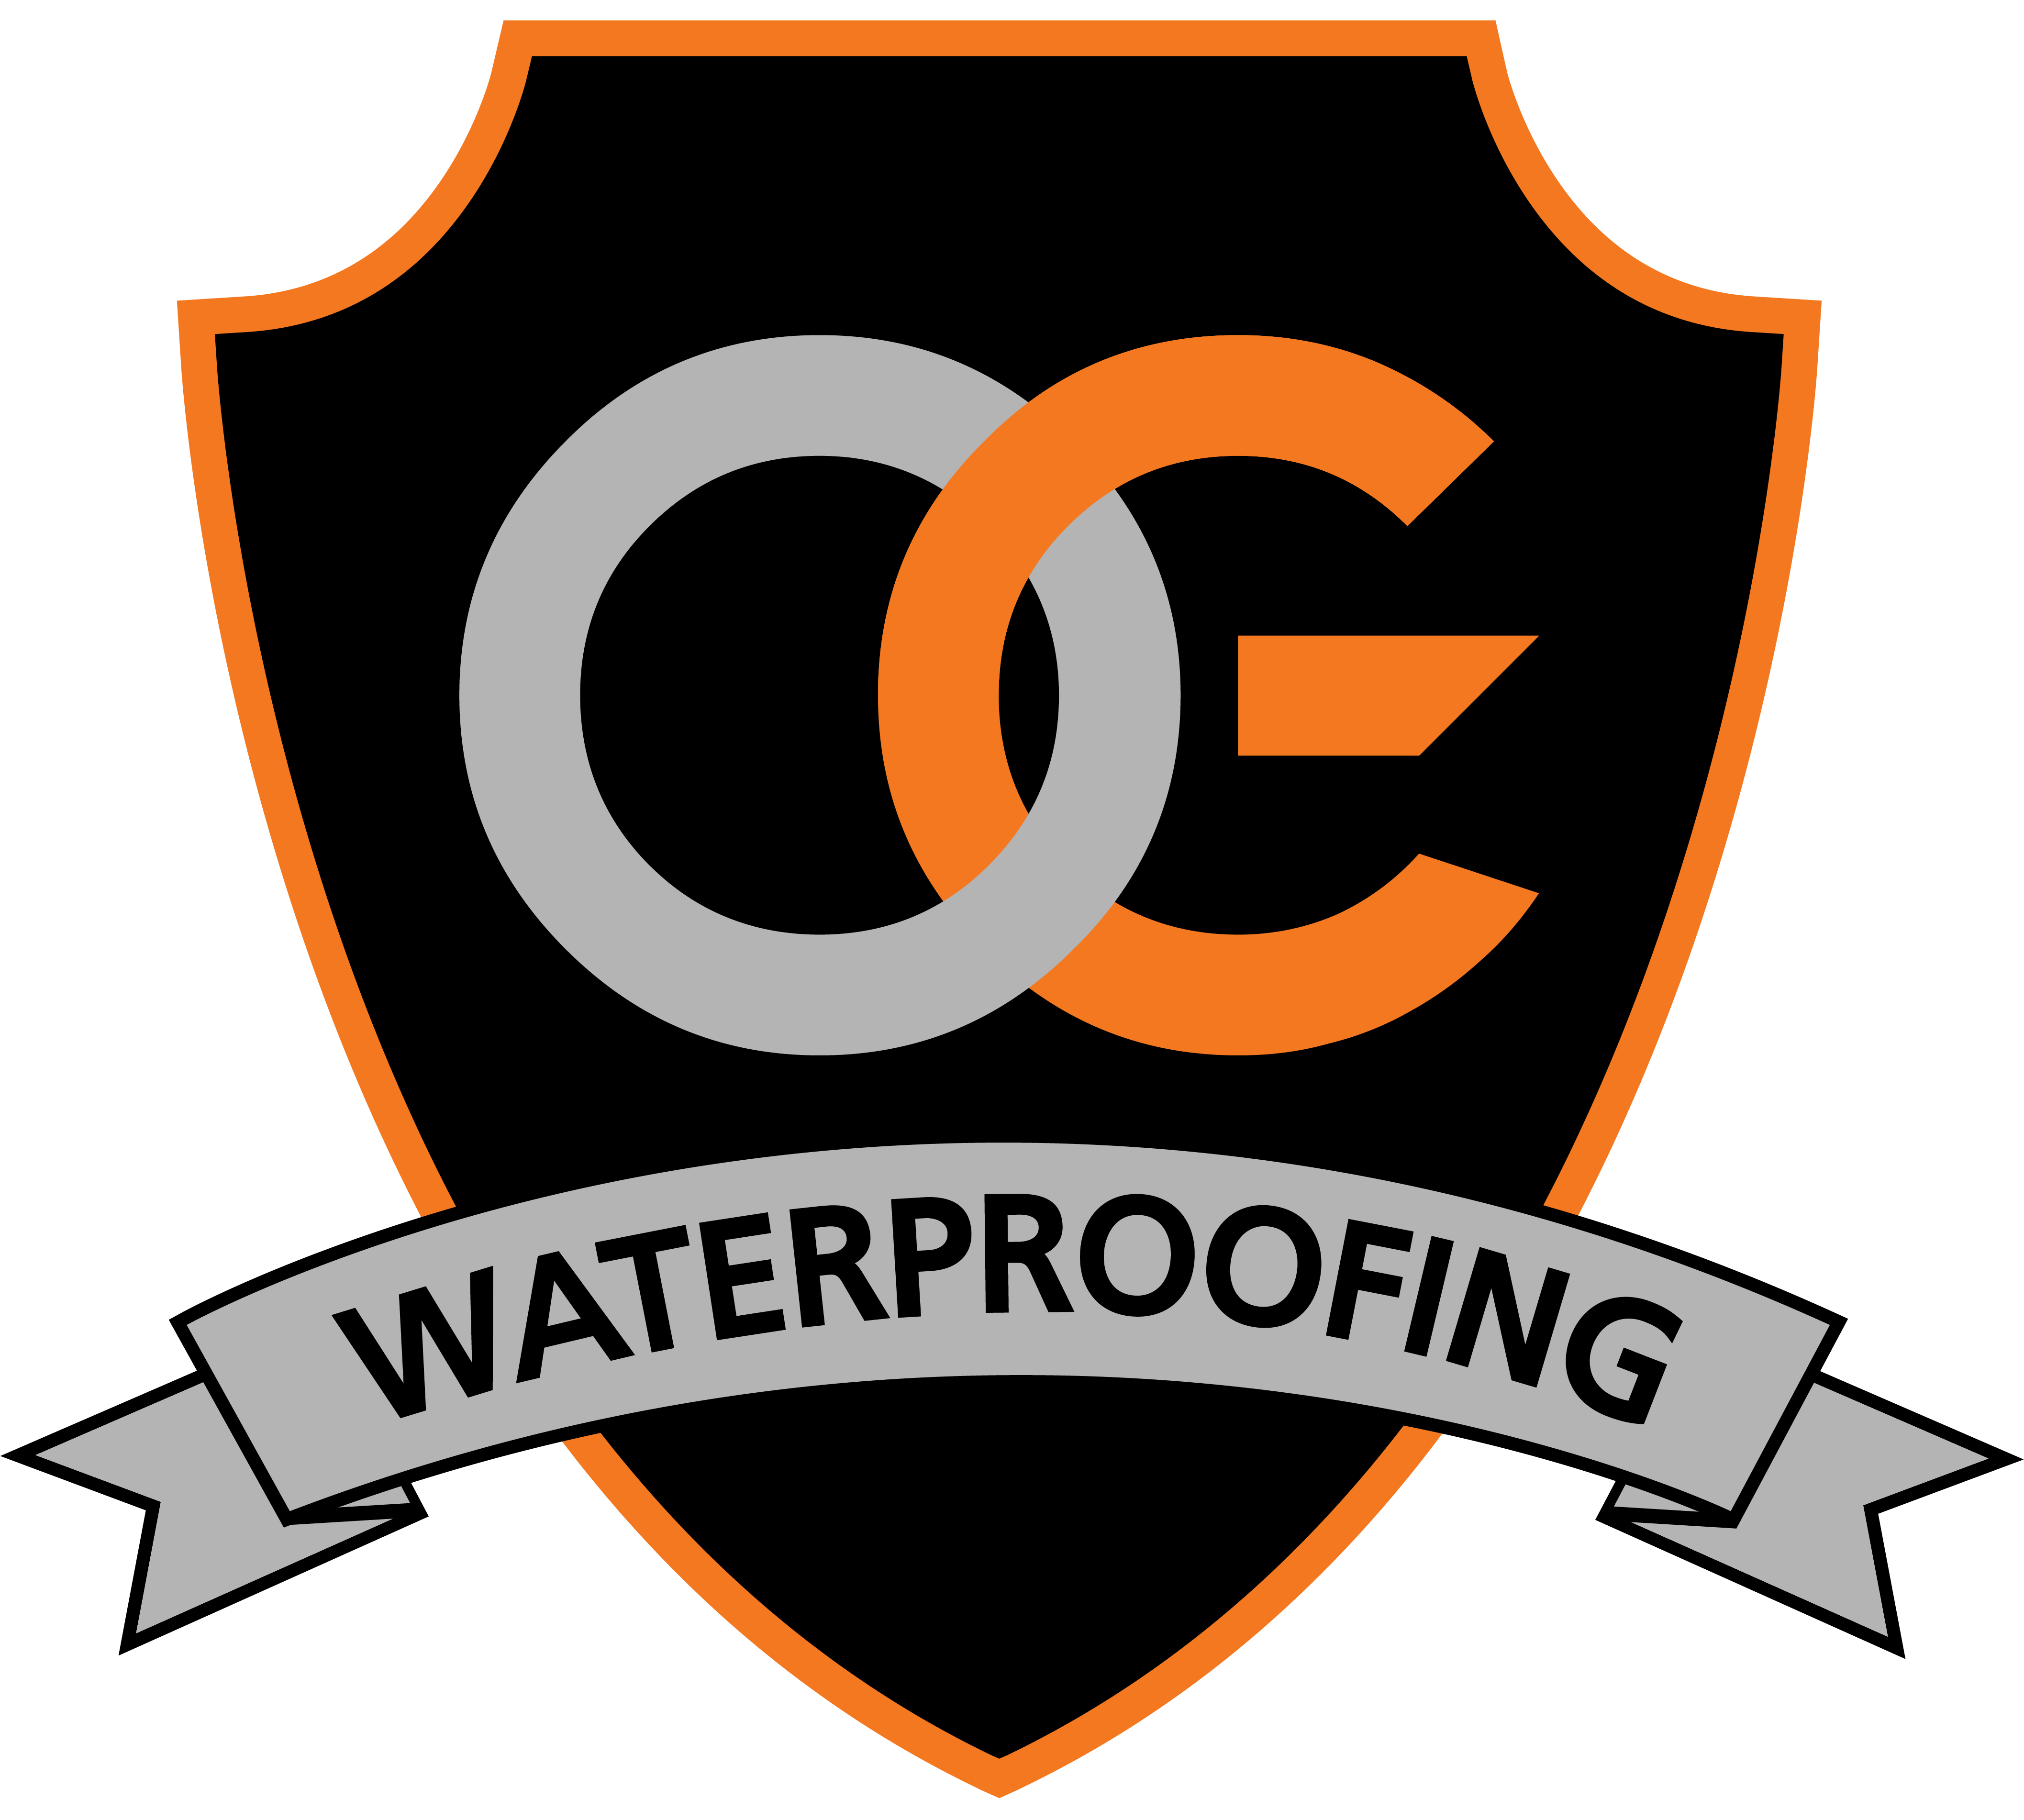 og waterproofing logo